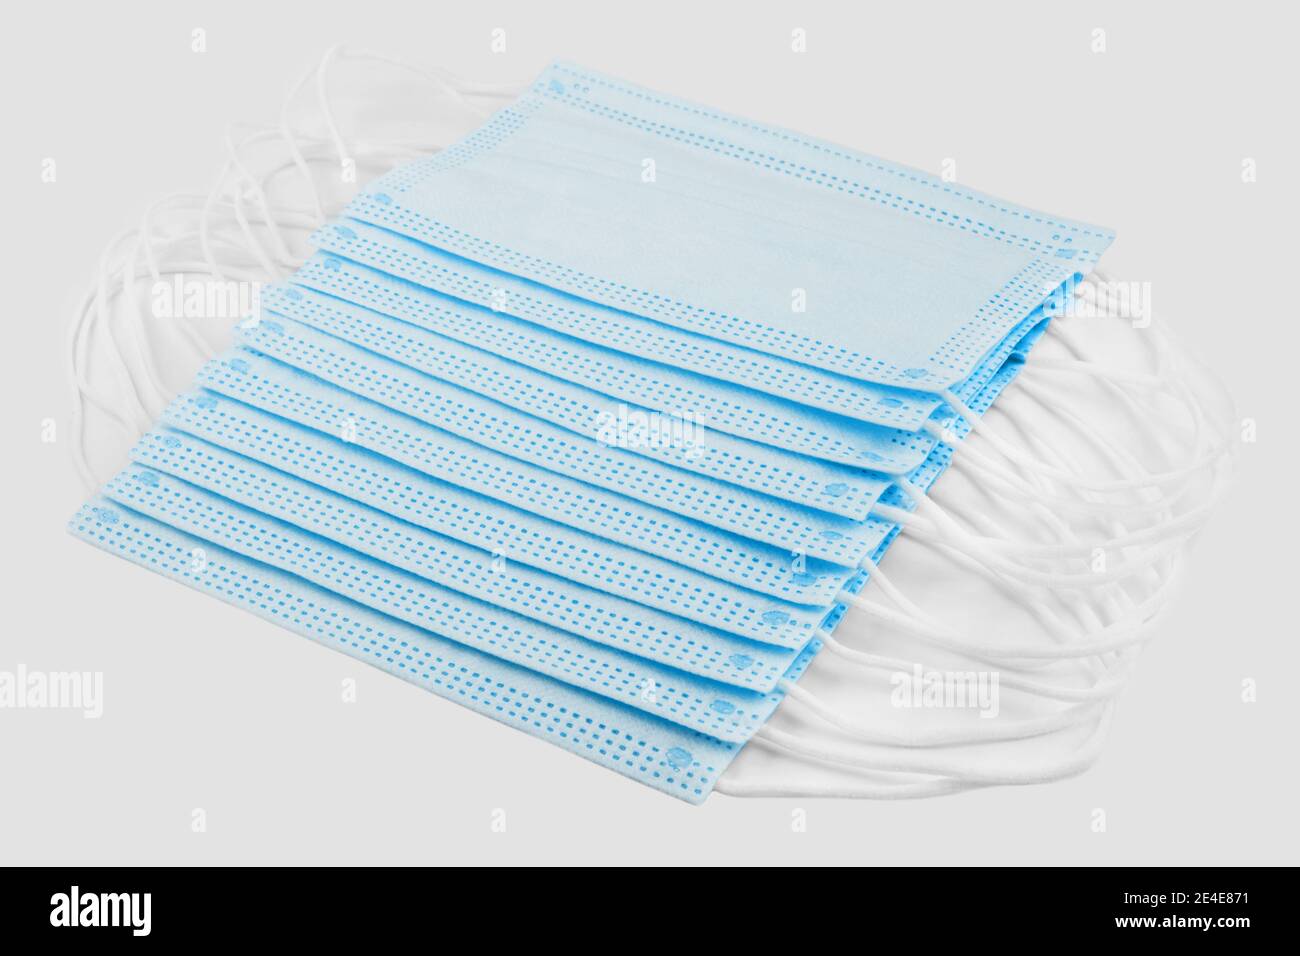 Zehn blaue Medizinische Masken close up Stock Photo - Alamy